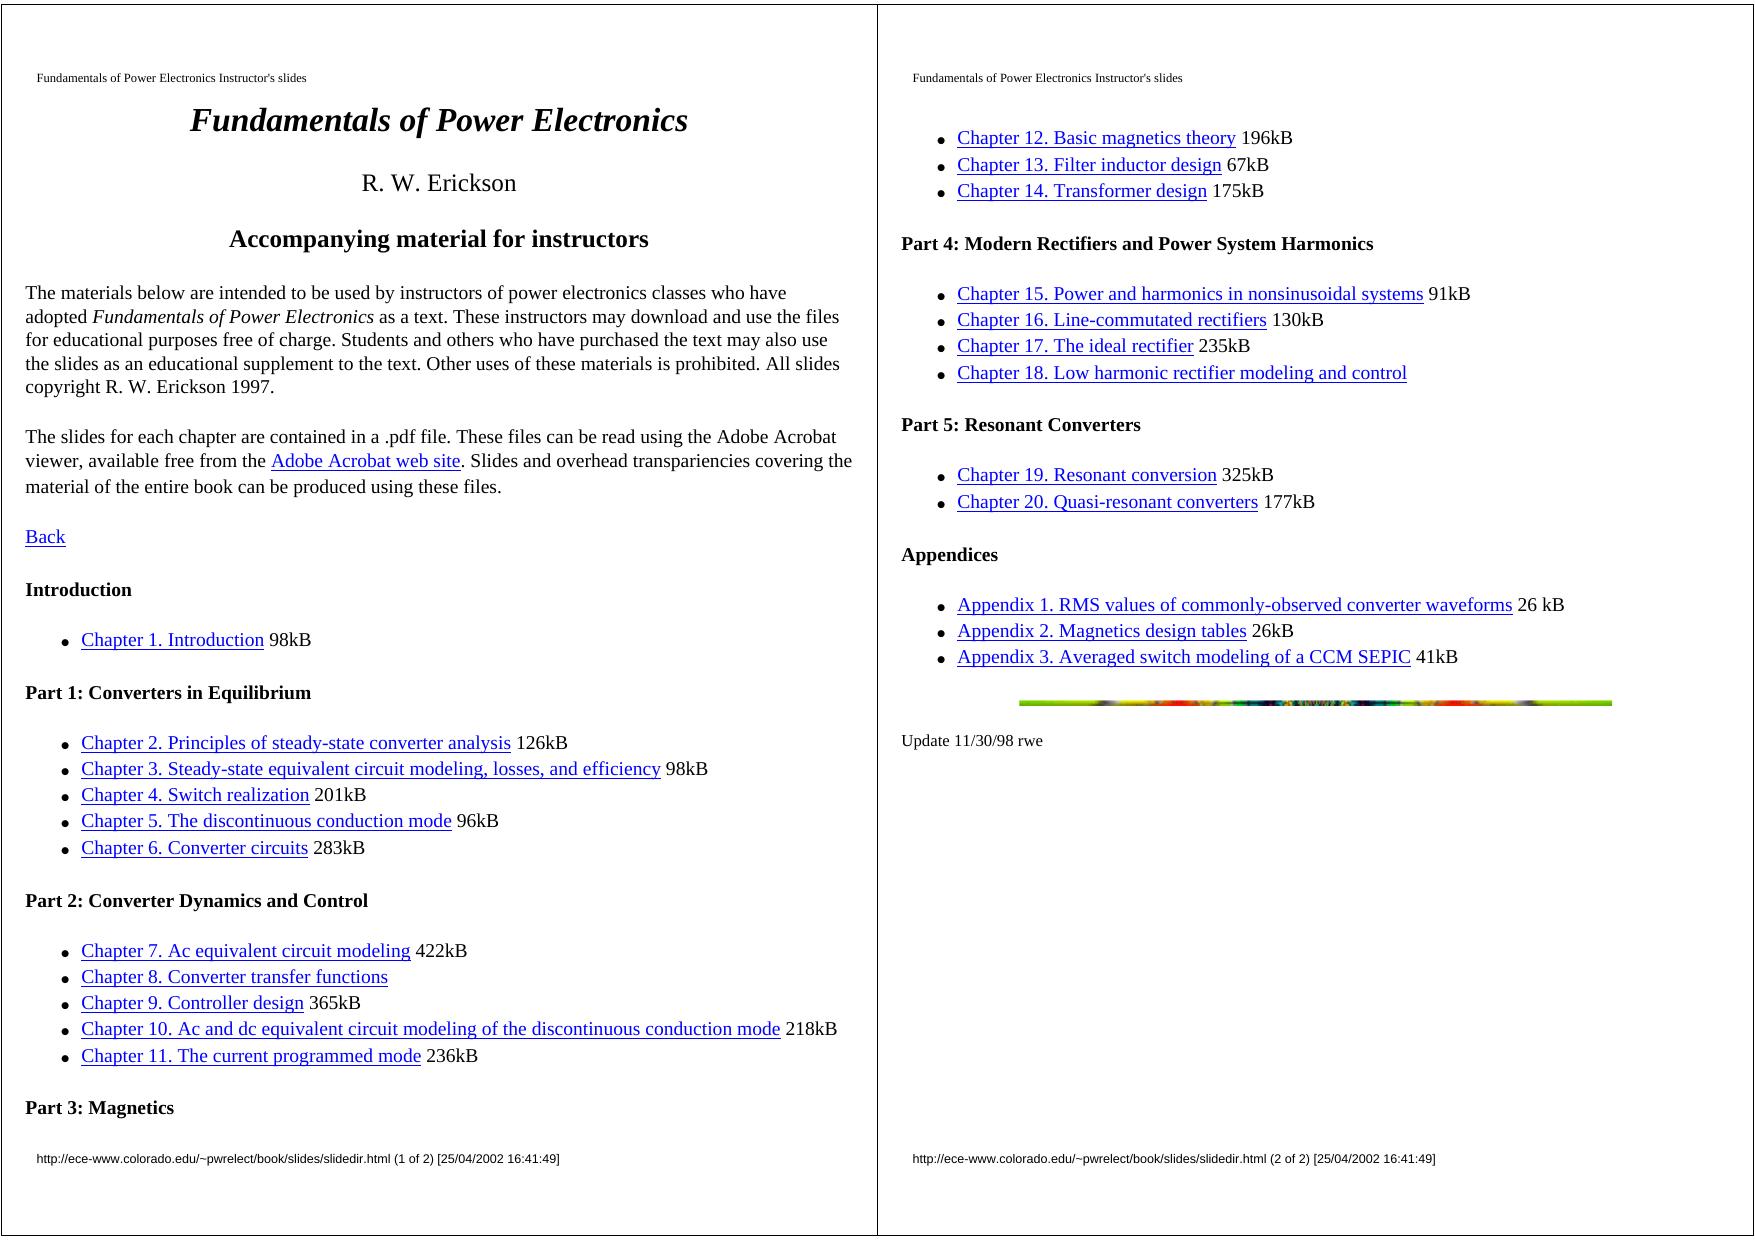 Fundamentals of Power Electronics by Robert W. Erickson